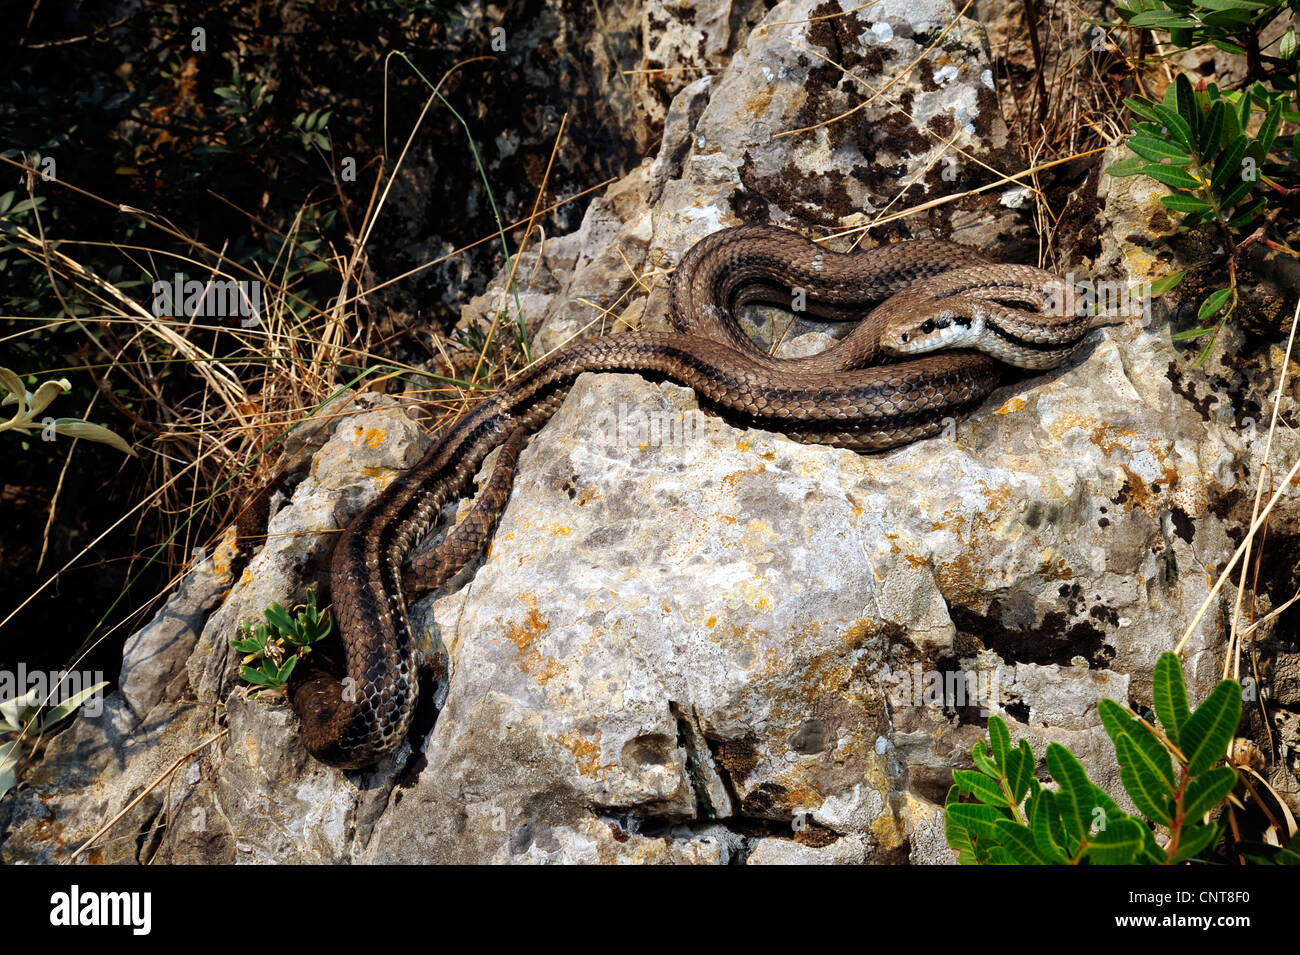 four-lined snake, yellow rat snake (Elaphe quatuorlineata), lying on a rock, Greece, Peloponnes, Natura 2000 Area Gialova Lagune, Gialova Stock Photo